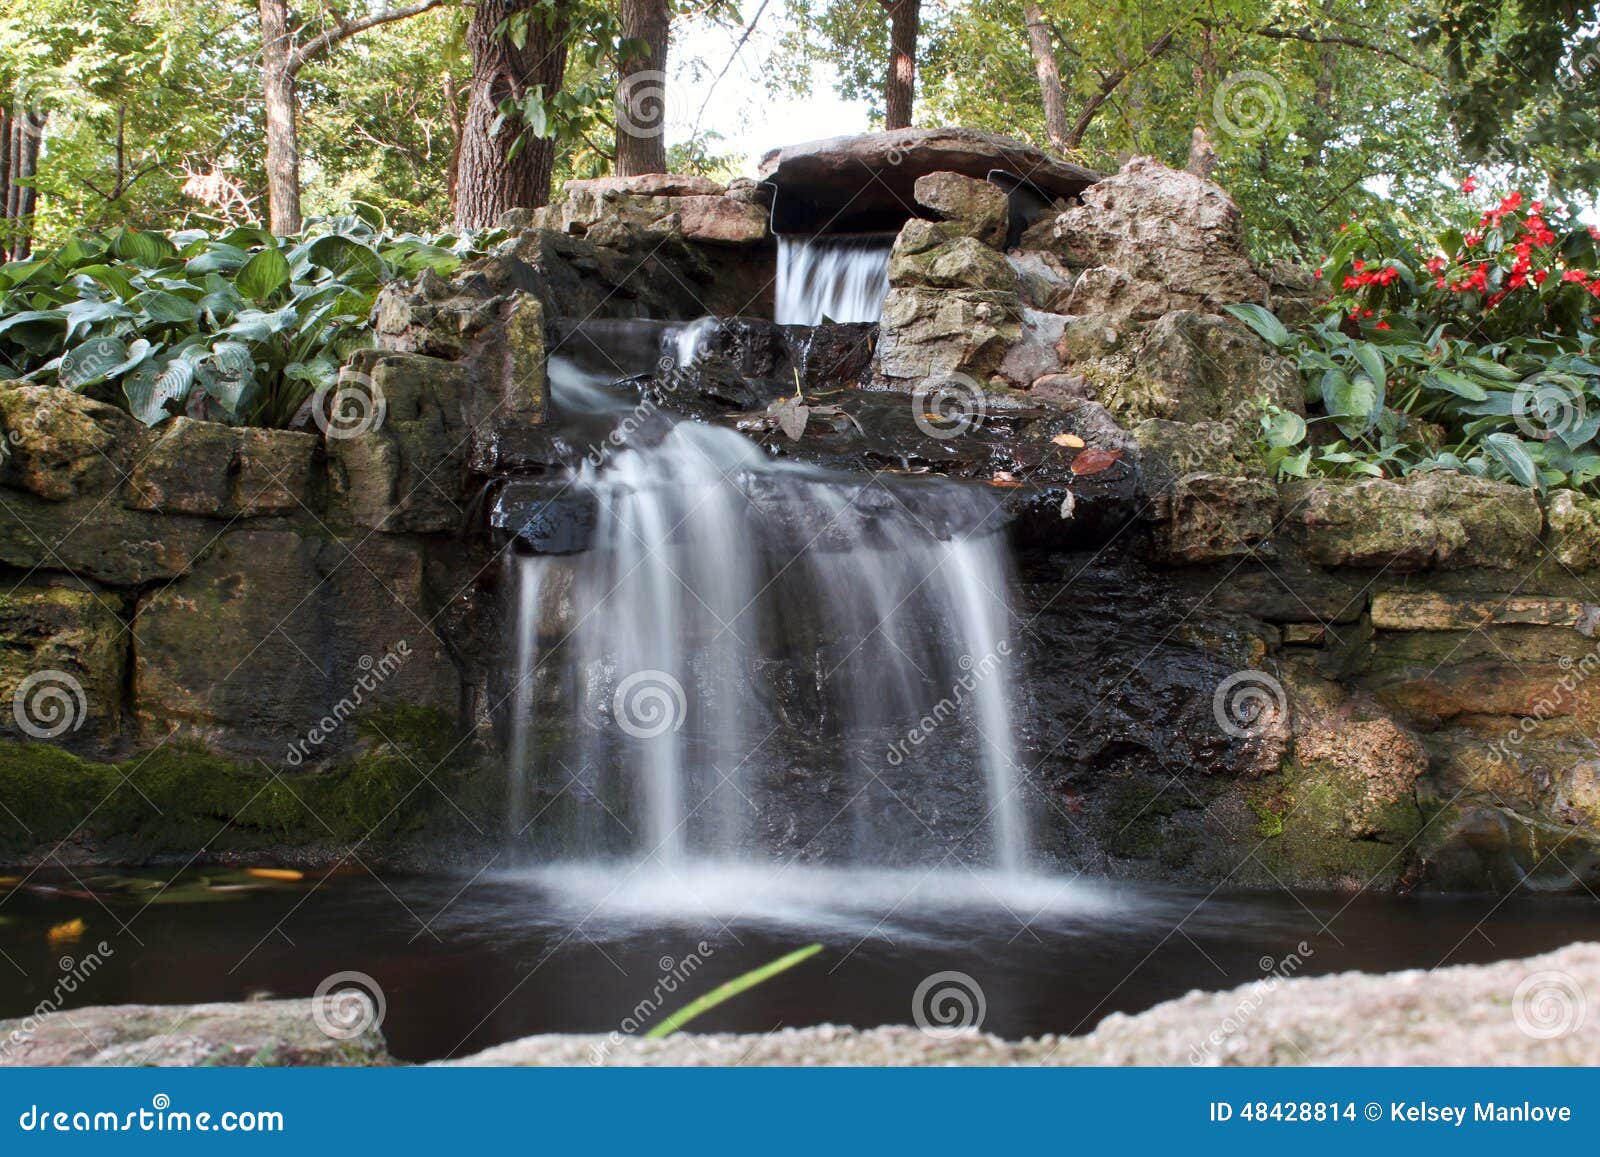 nathaniel green park, springfield missouri waterfall